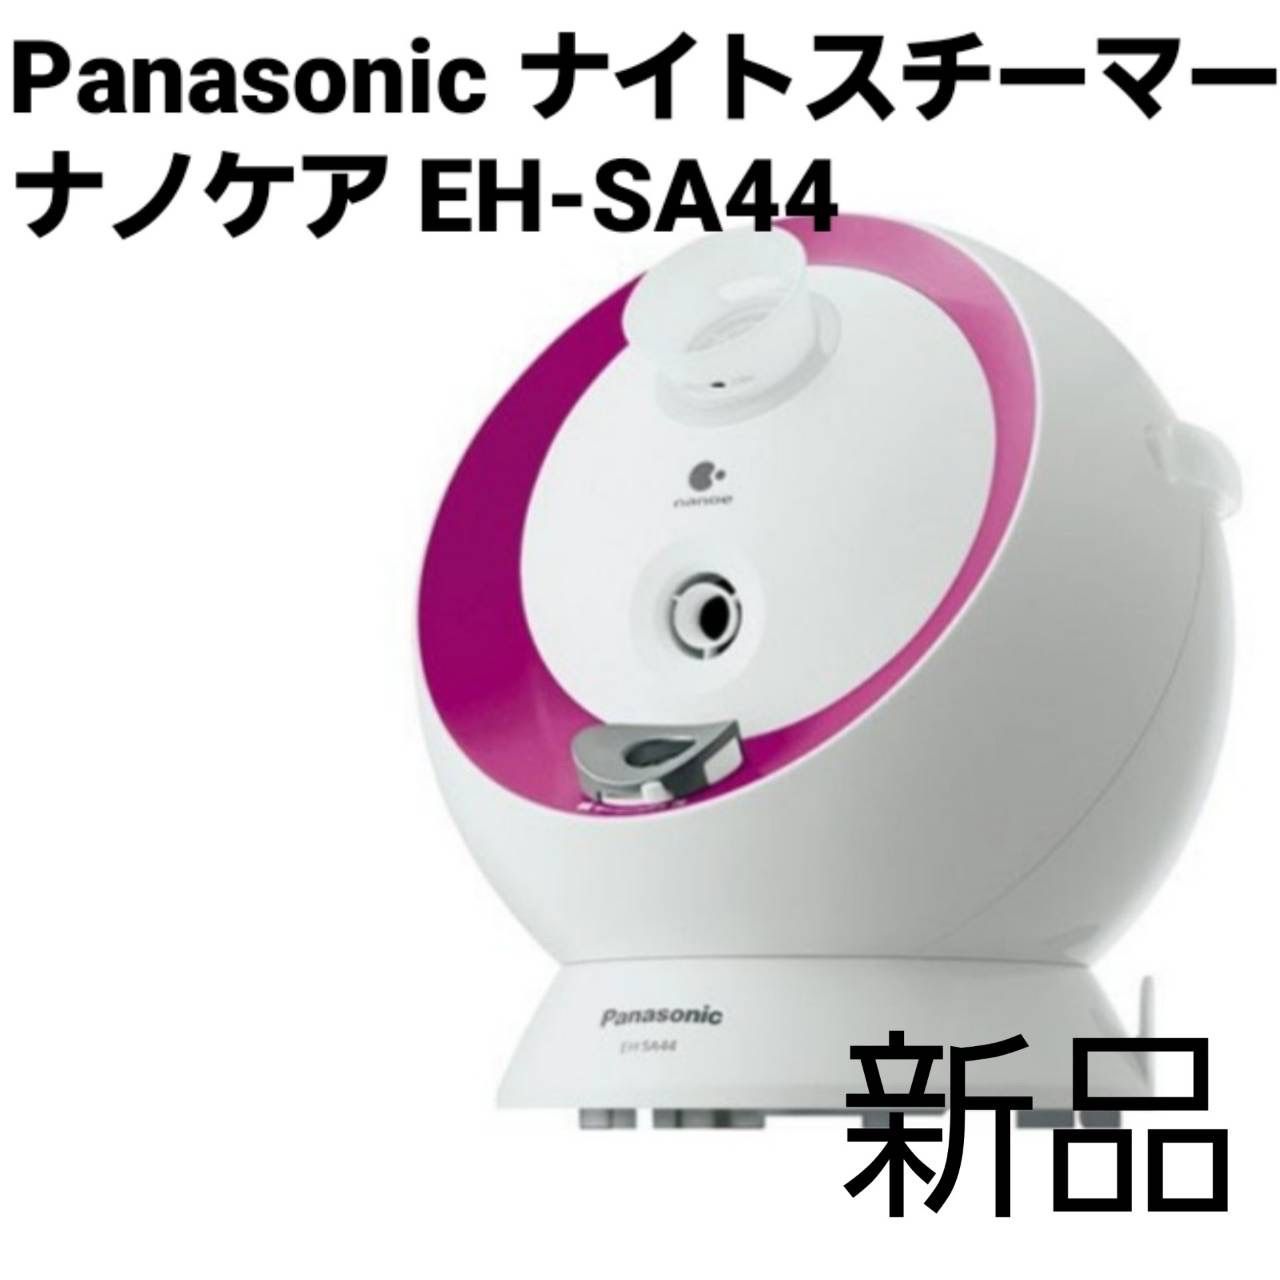 Panasonic ナイトスチーマー ナノケア EH-SA44 新品未使用